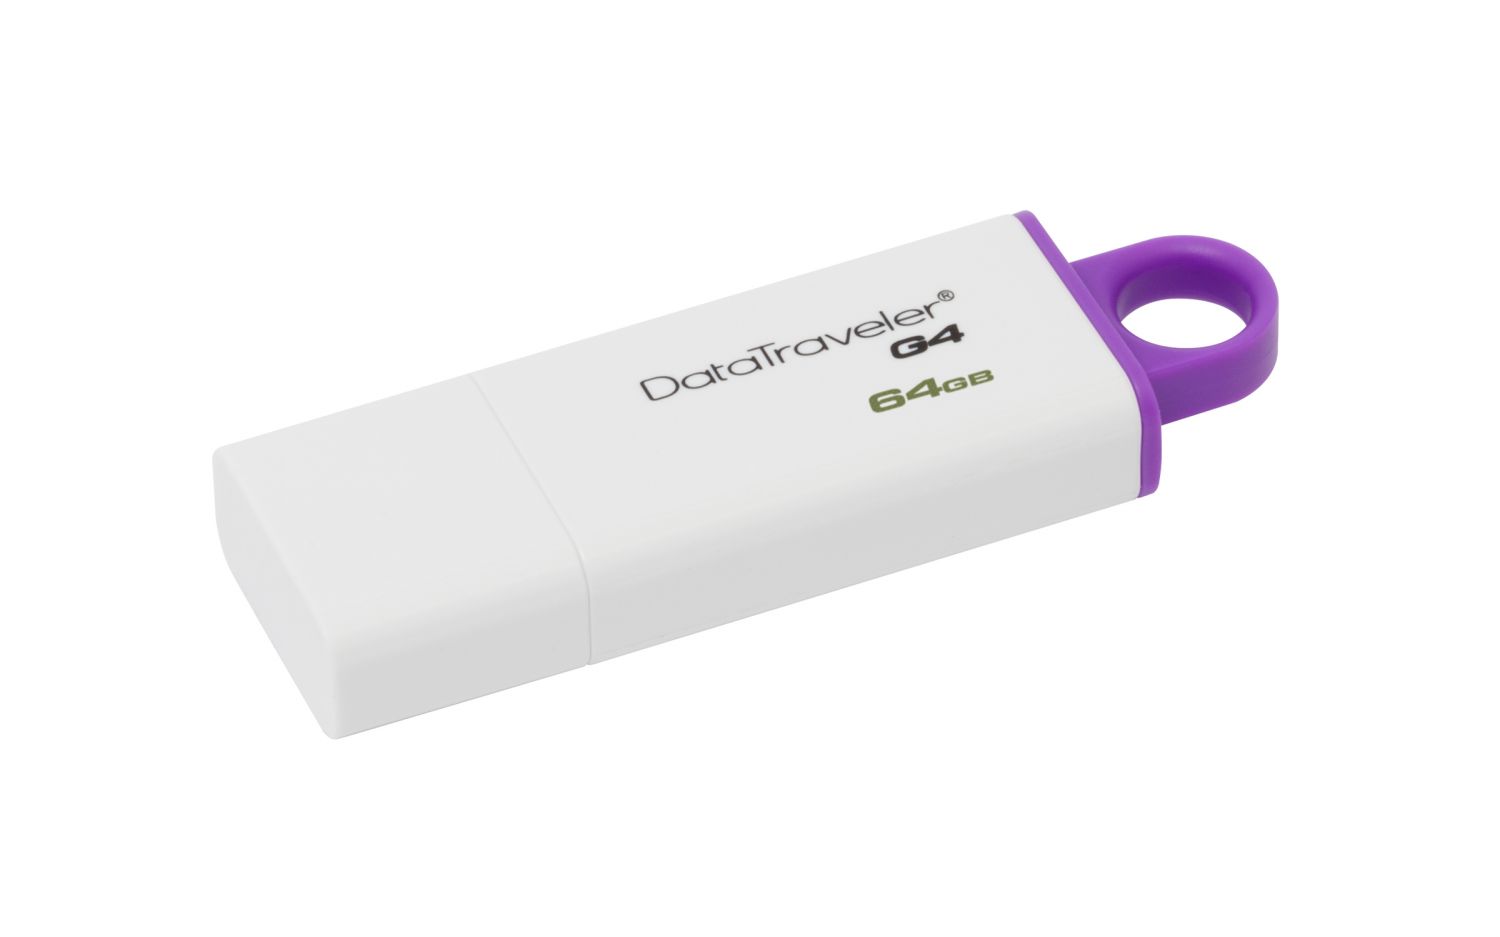 DTIG4/64GB - Unidad flash USB Kingston Technology DataTraveler G4 unidad  USB 64 GB USB tipo A 3.0 (3.1 Gen 1) Violeta, Blanco